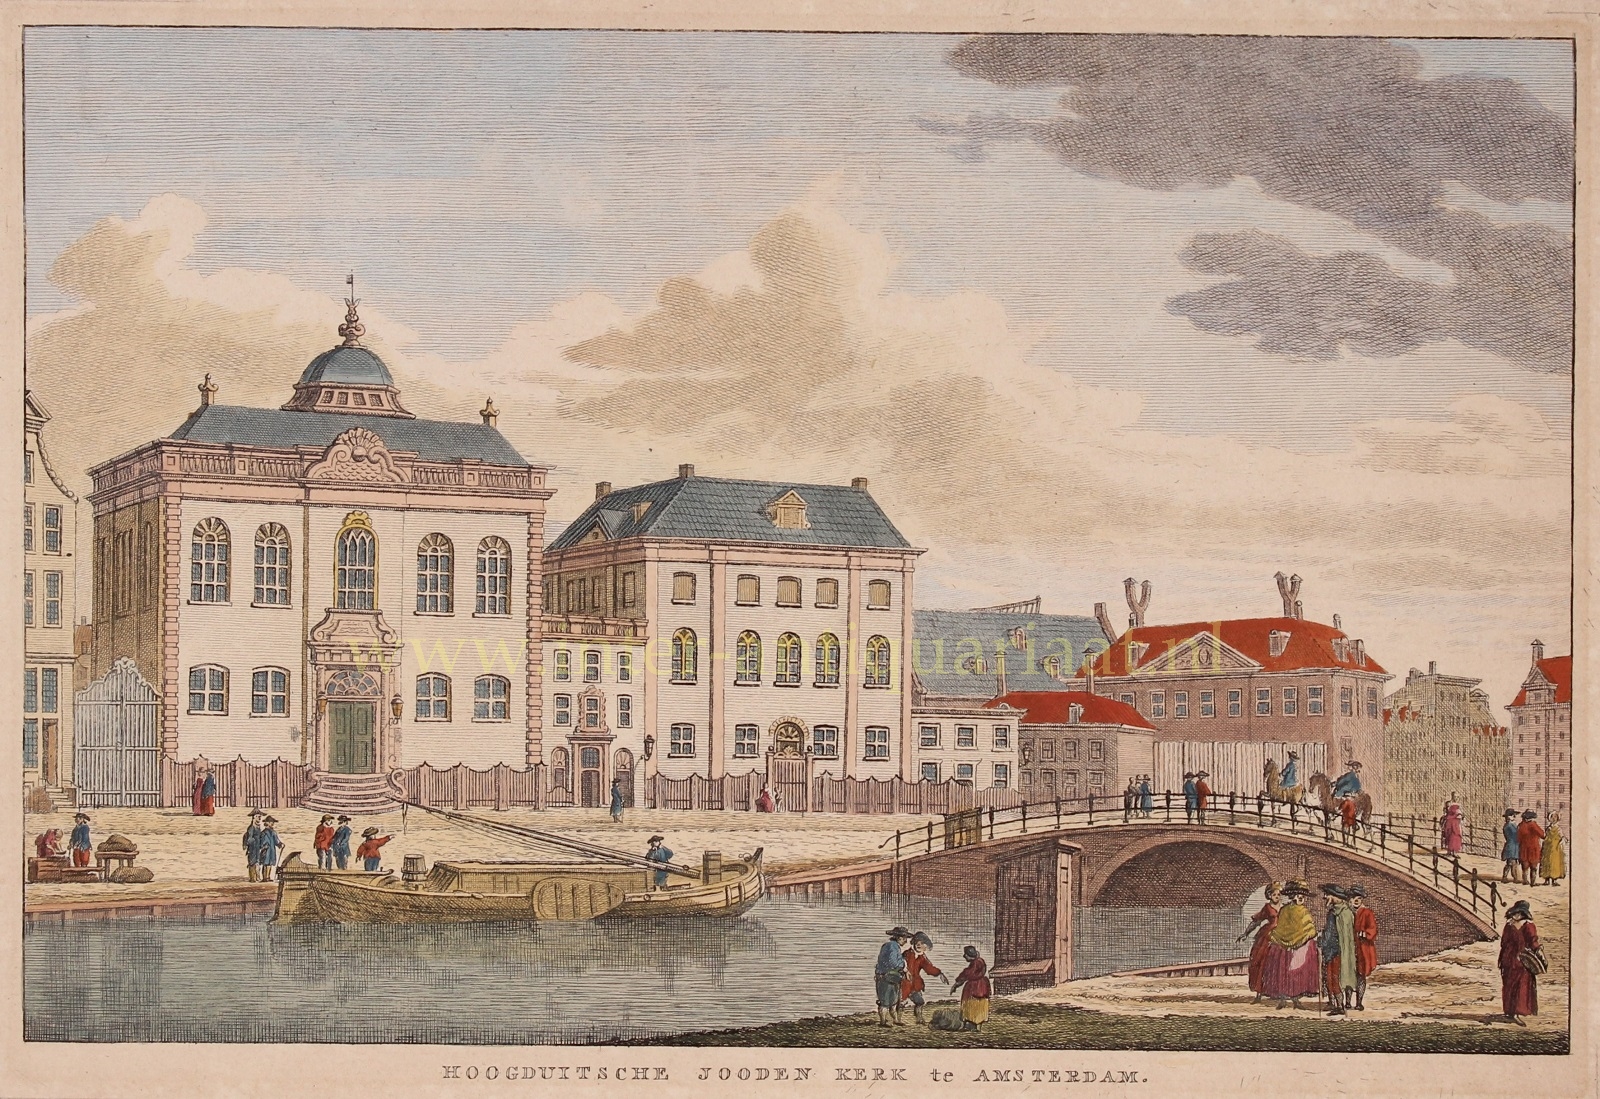  - Amsterdam Great Synagoge - Karel Fredrik Bendorp after Jan Bulthuis, 1793